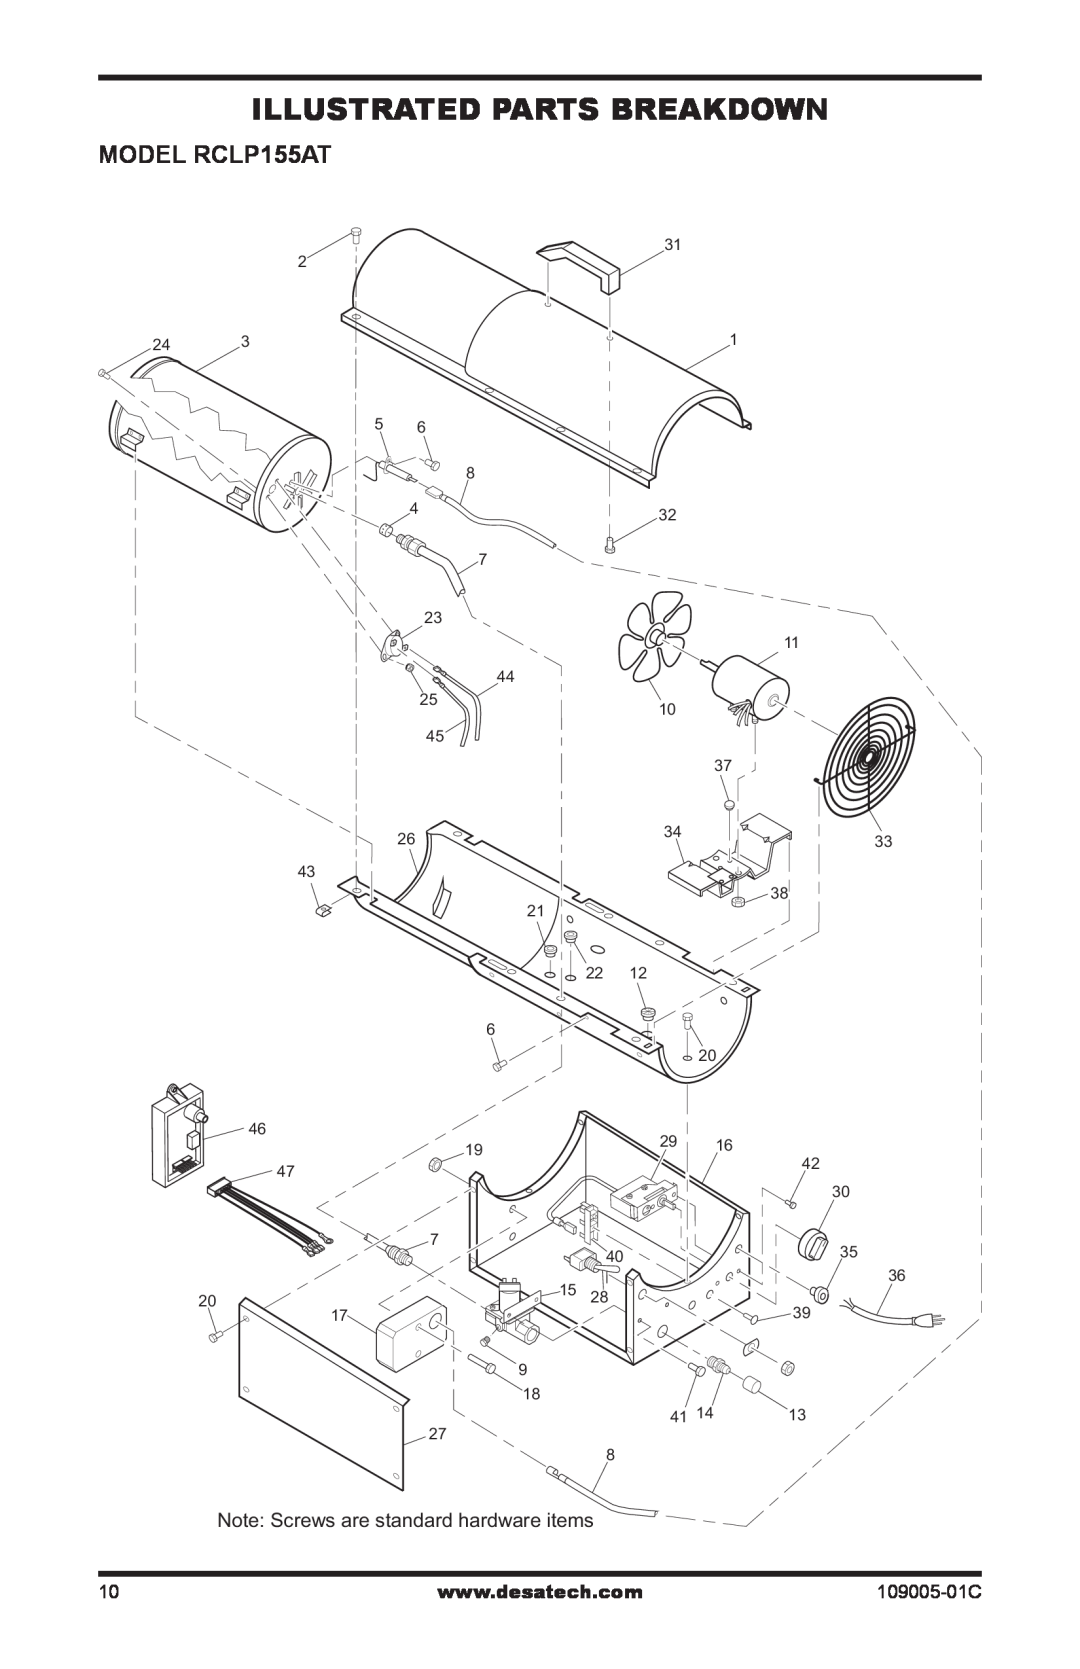 Desa owner manual Illustrated Parts Breakdown, MODEL RCLP155AT, Note Screws are standard hardware items 